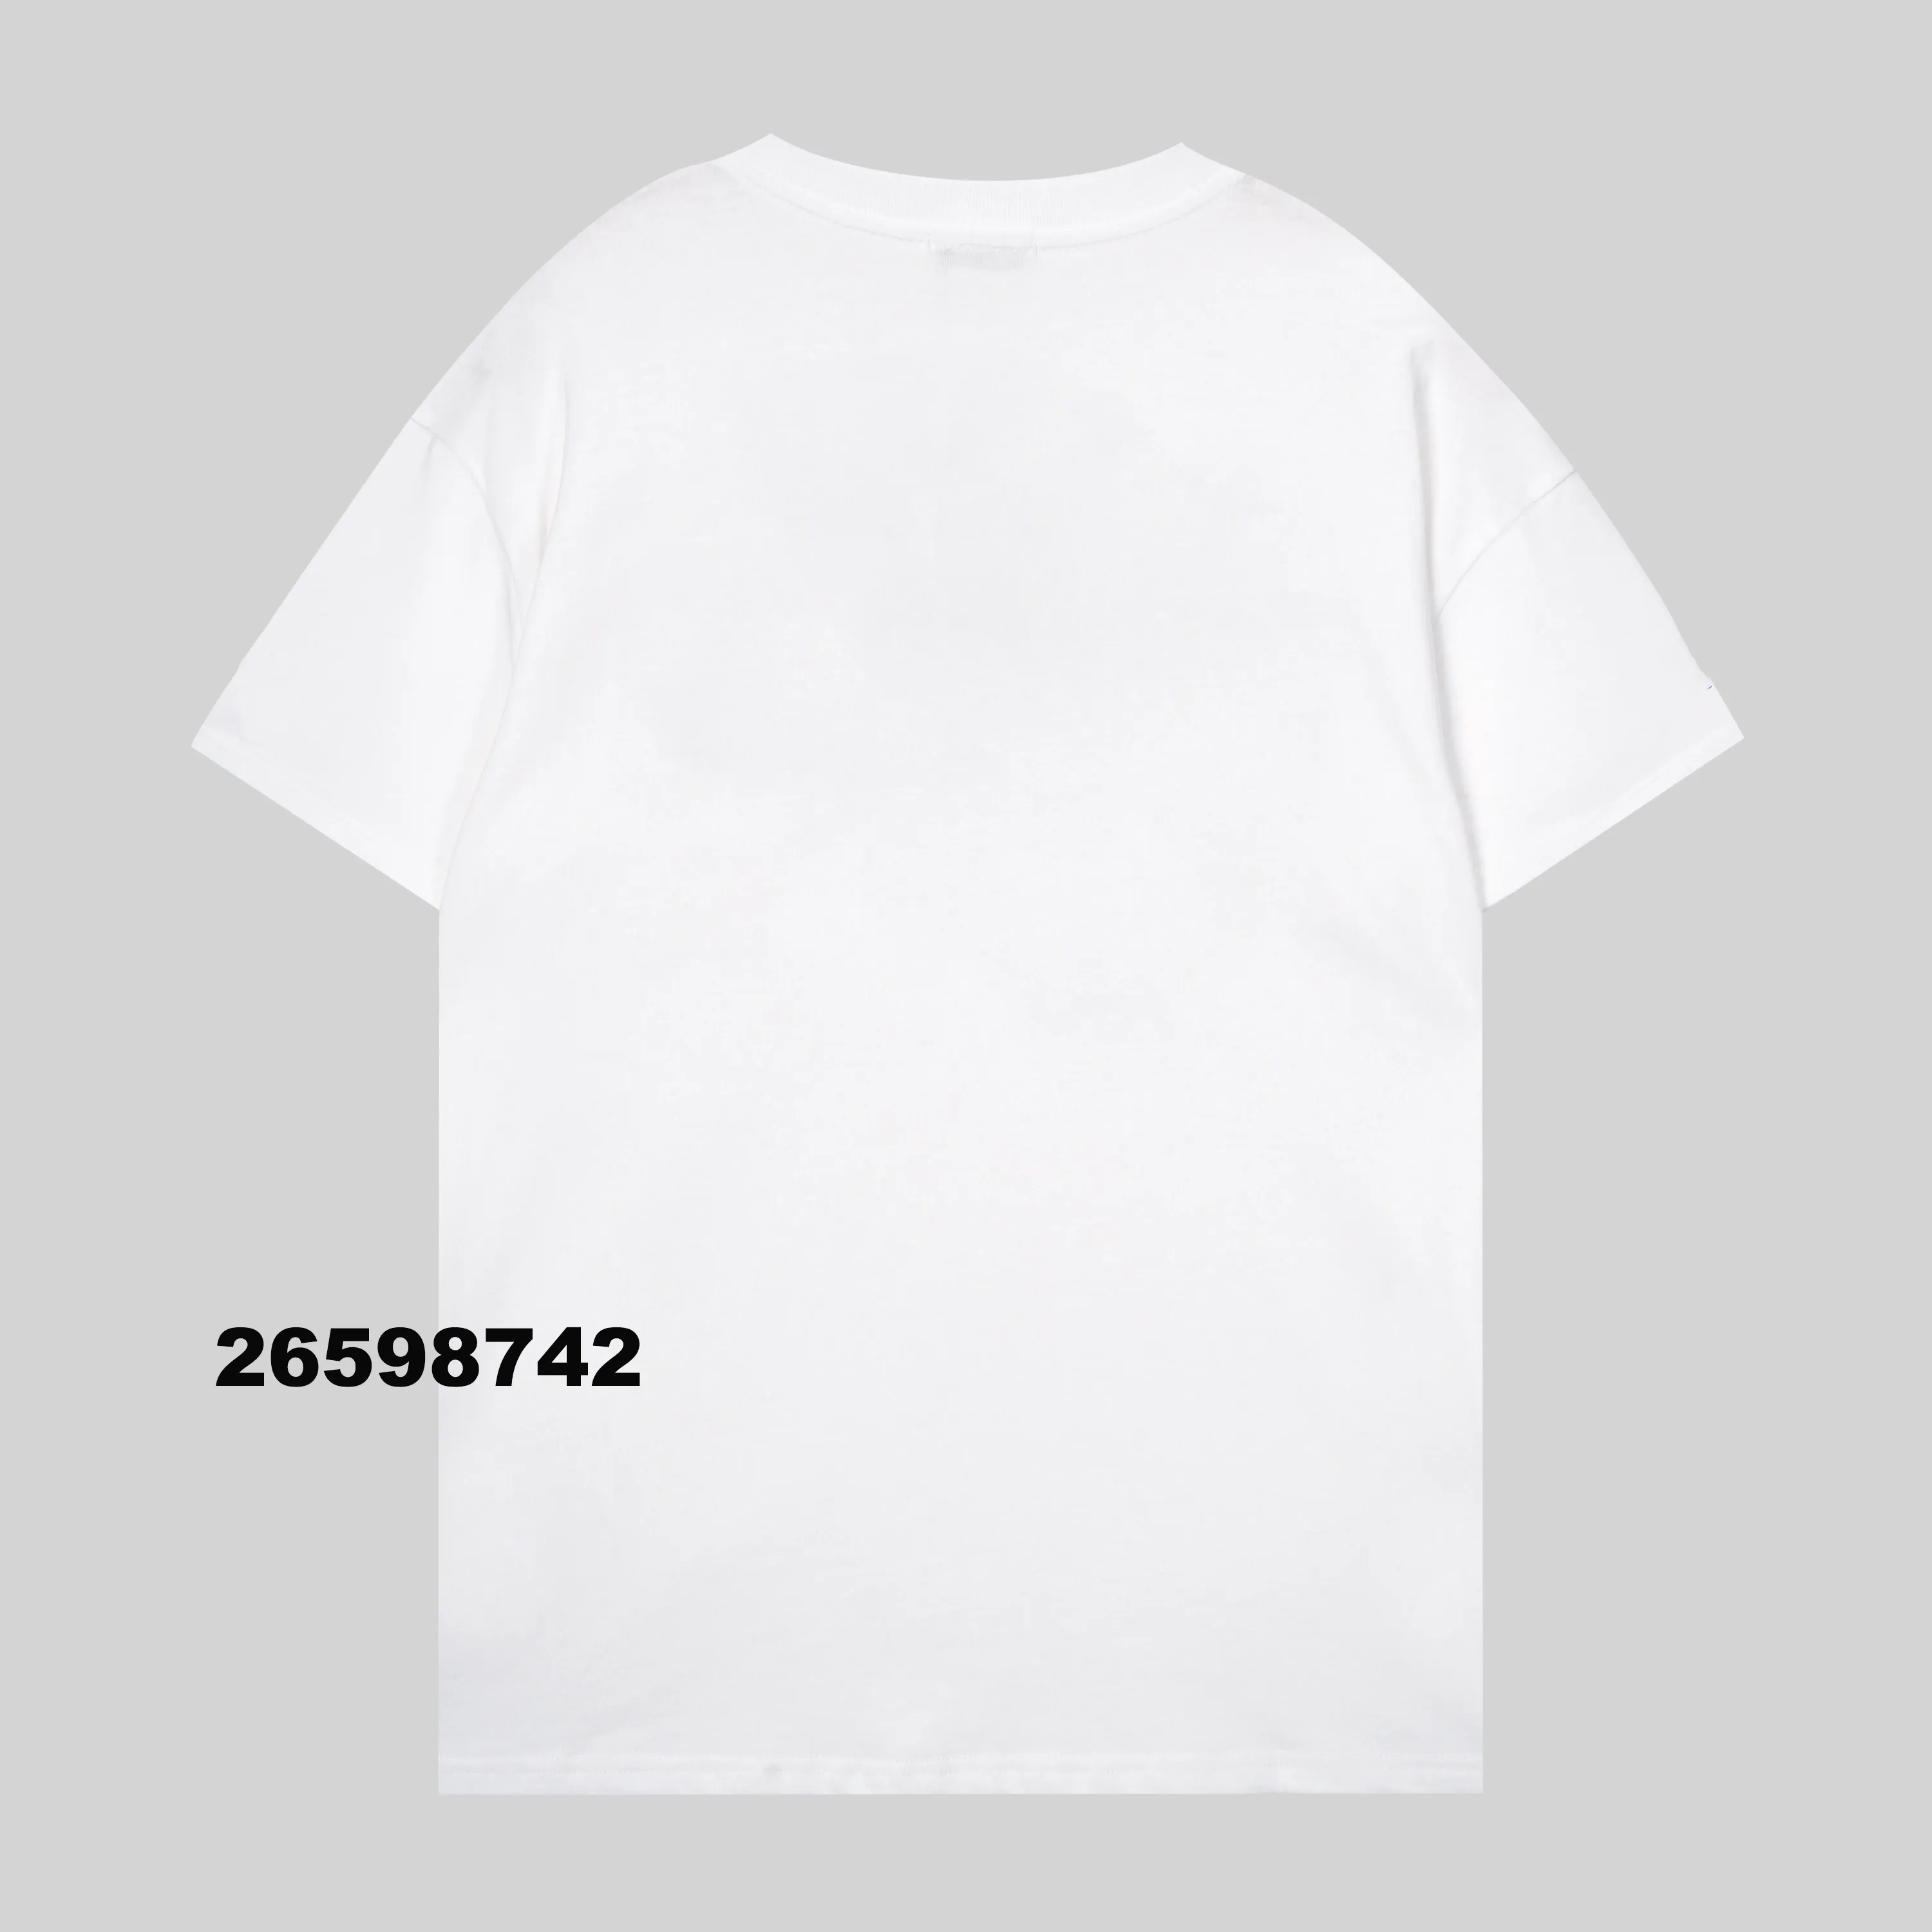 Designer Mens T-shirt Hommes Shirts Fashion Tshirt Letters Casual Summer Summer à manches manches manche 1212190